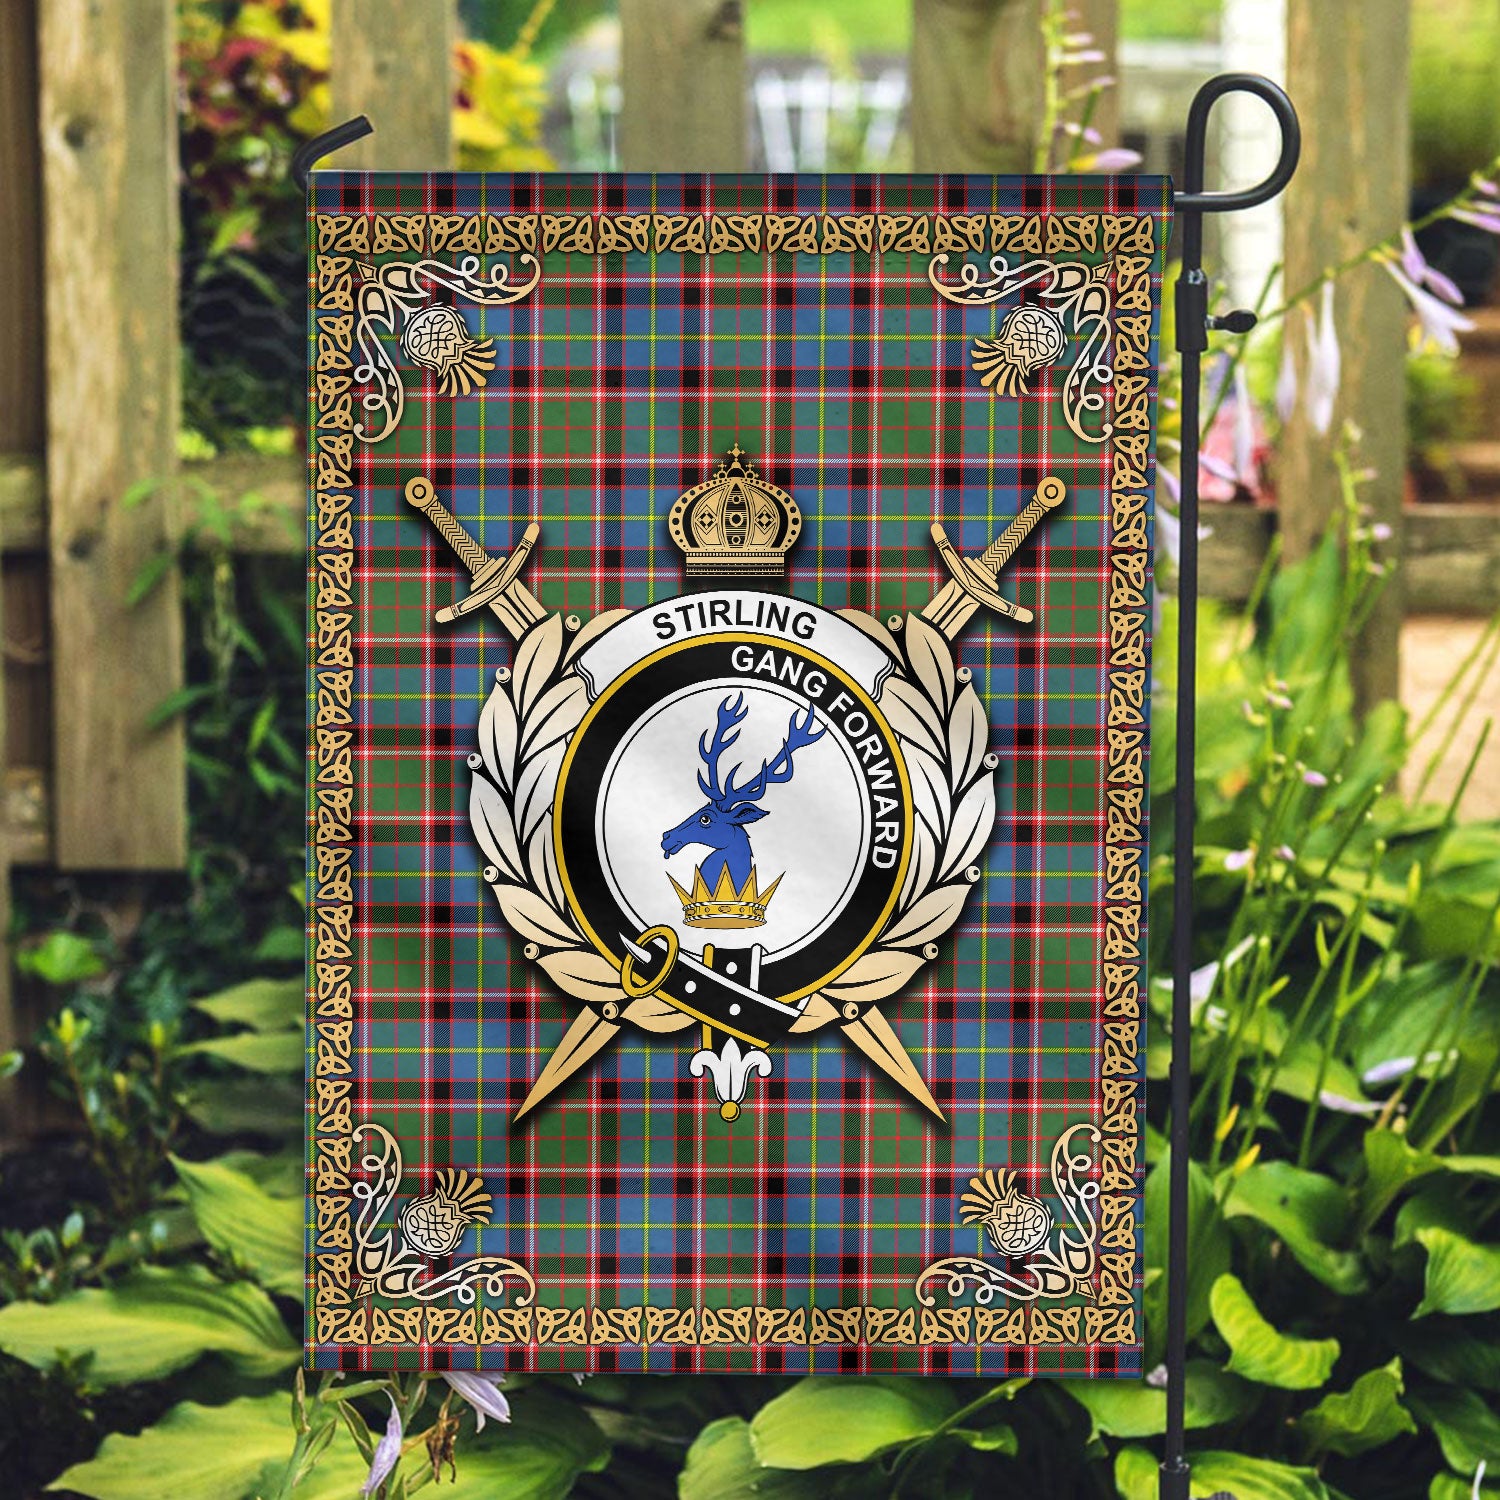 Stirling (of Cadder-Present Chief) Tartan Crest Garden Flag - Celtic Thistle Style